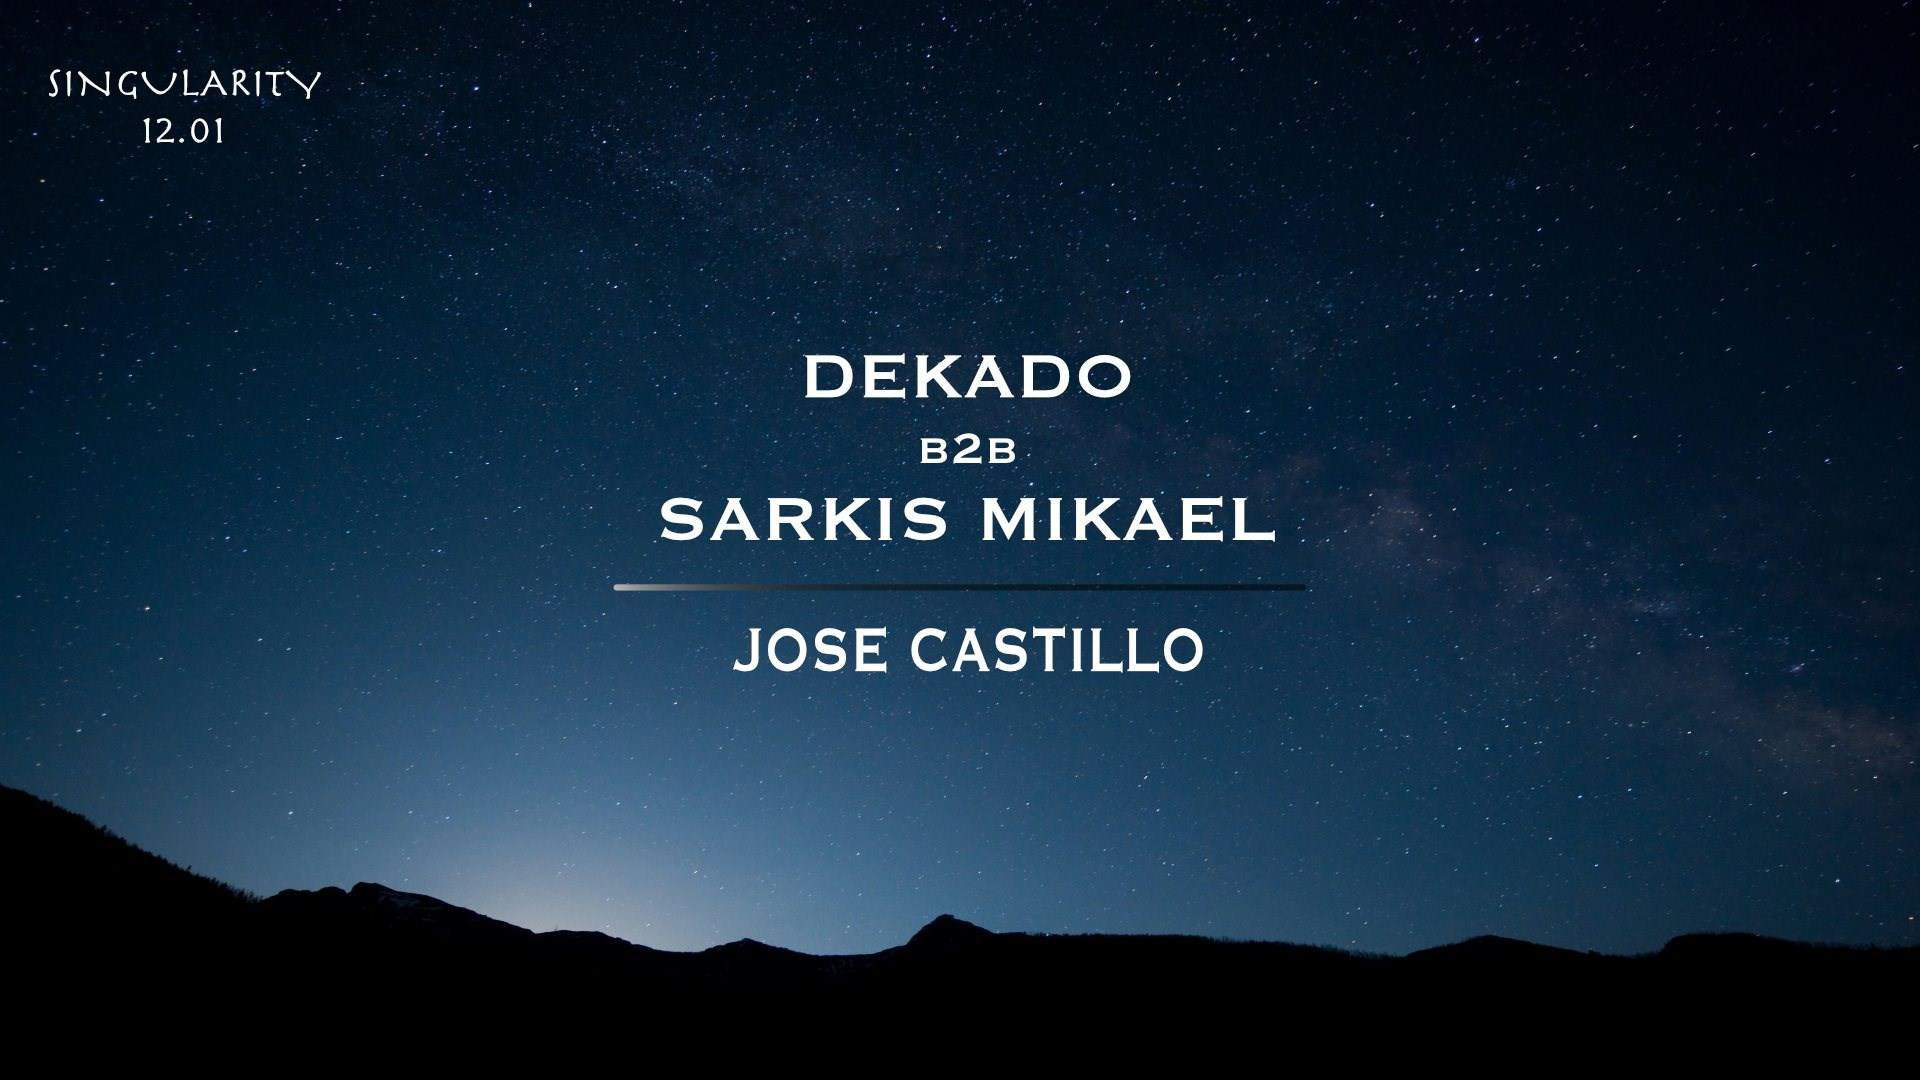 Singularity: Dekado B2B Sarkis Mikael and Jose Castillo - フライヤー表